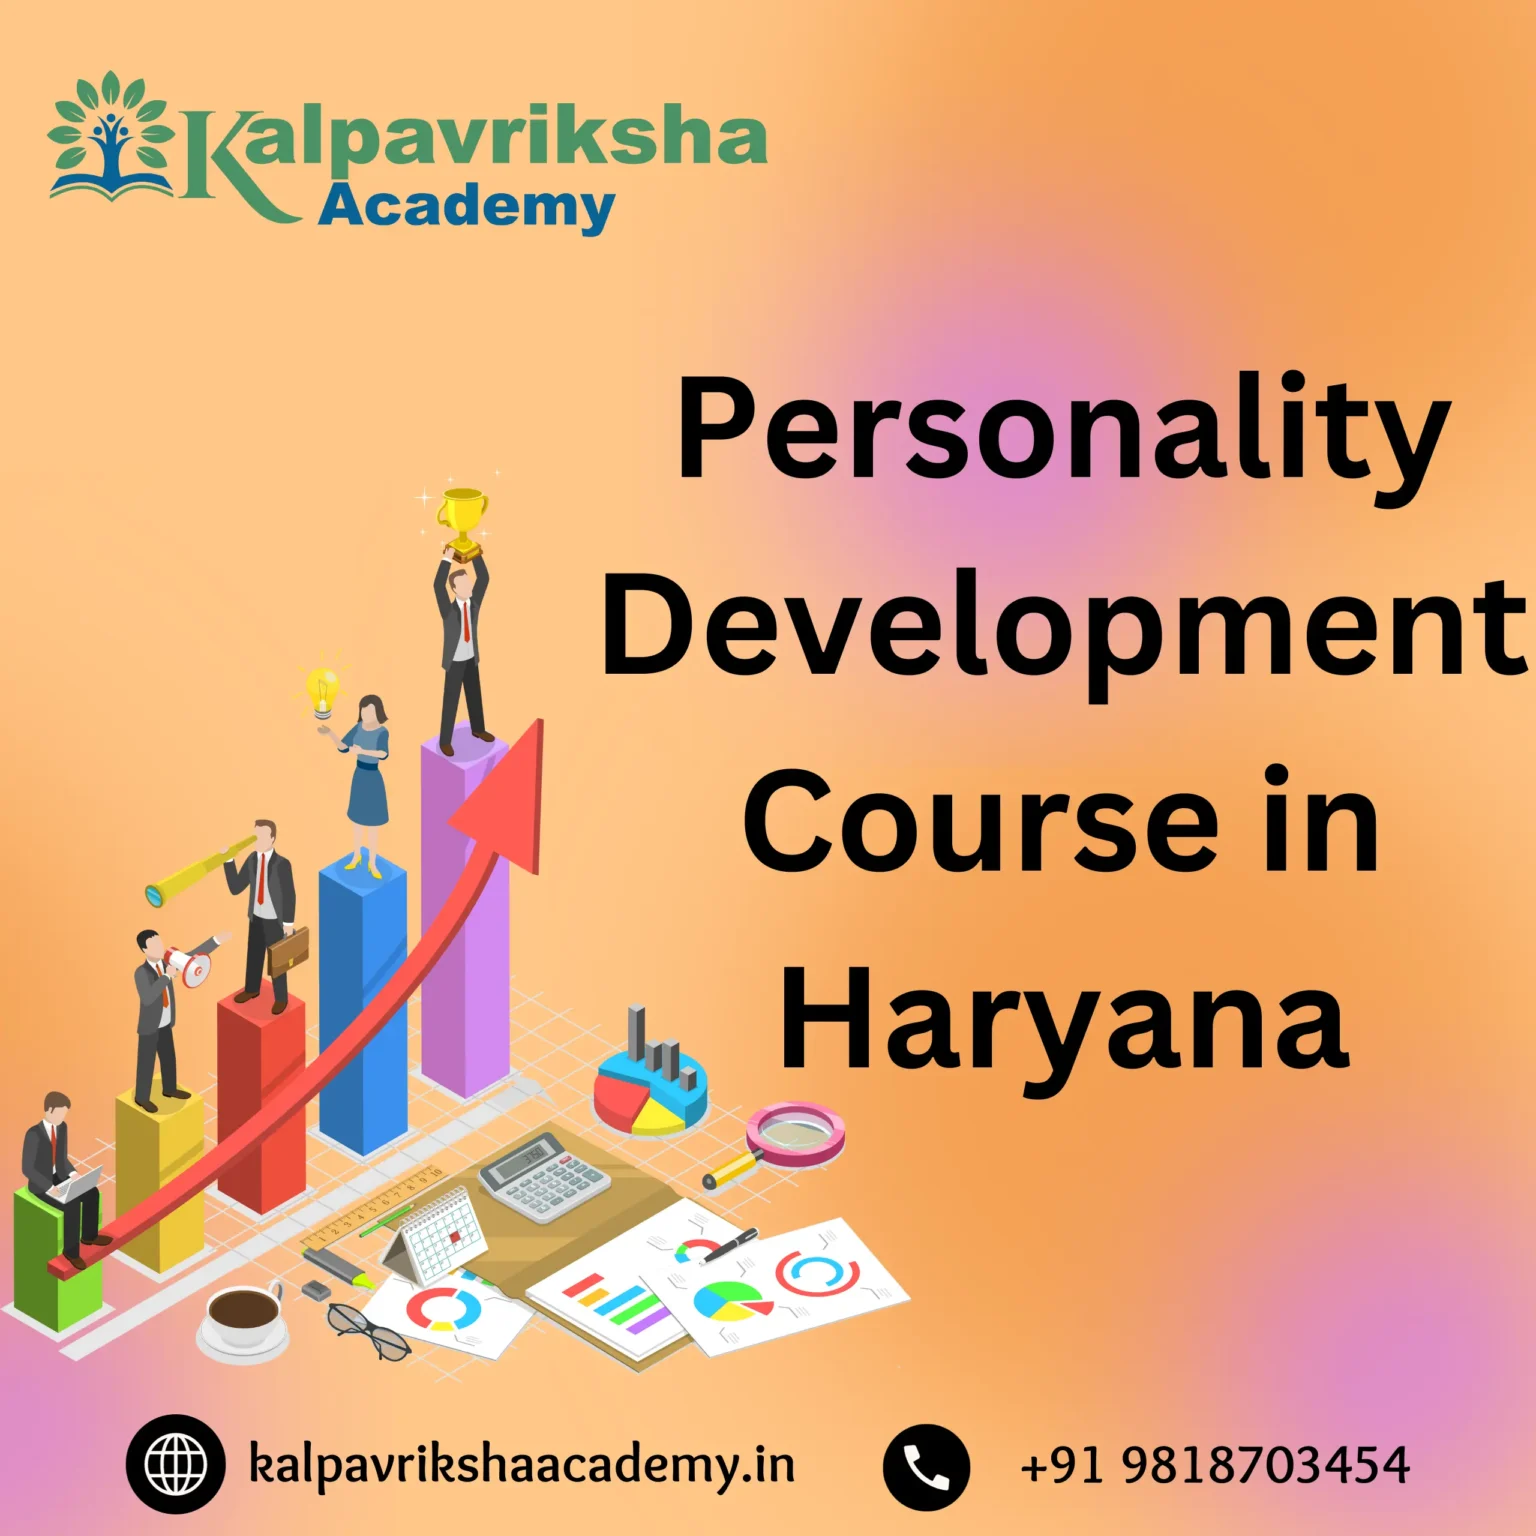 Personality Development Course in Haryana